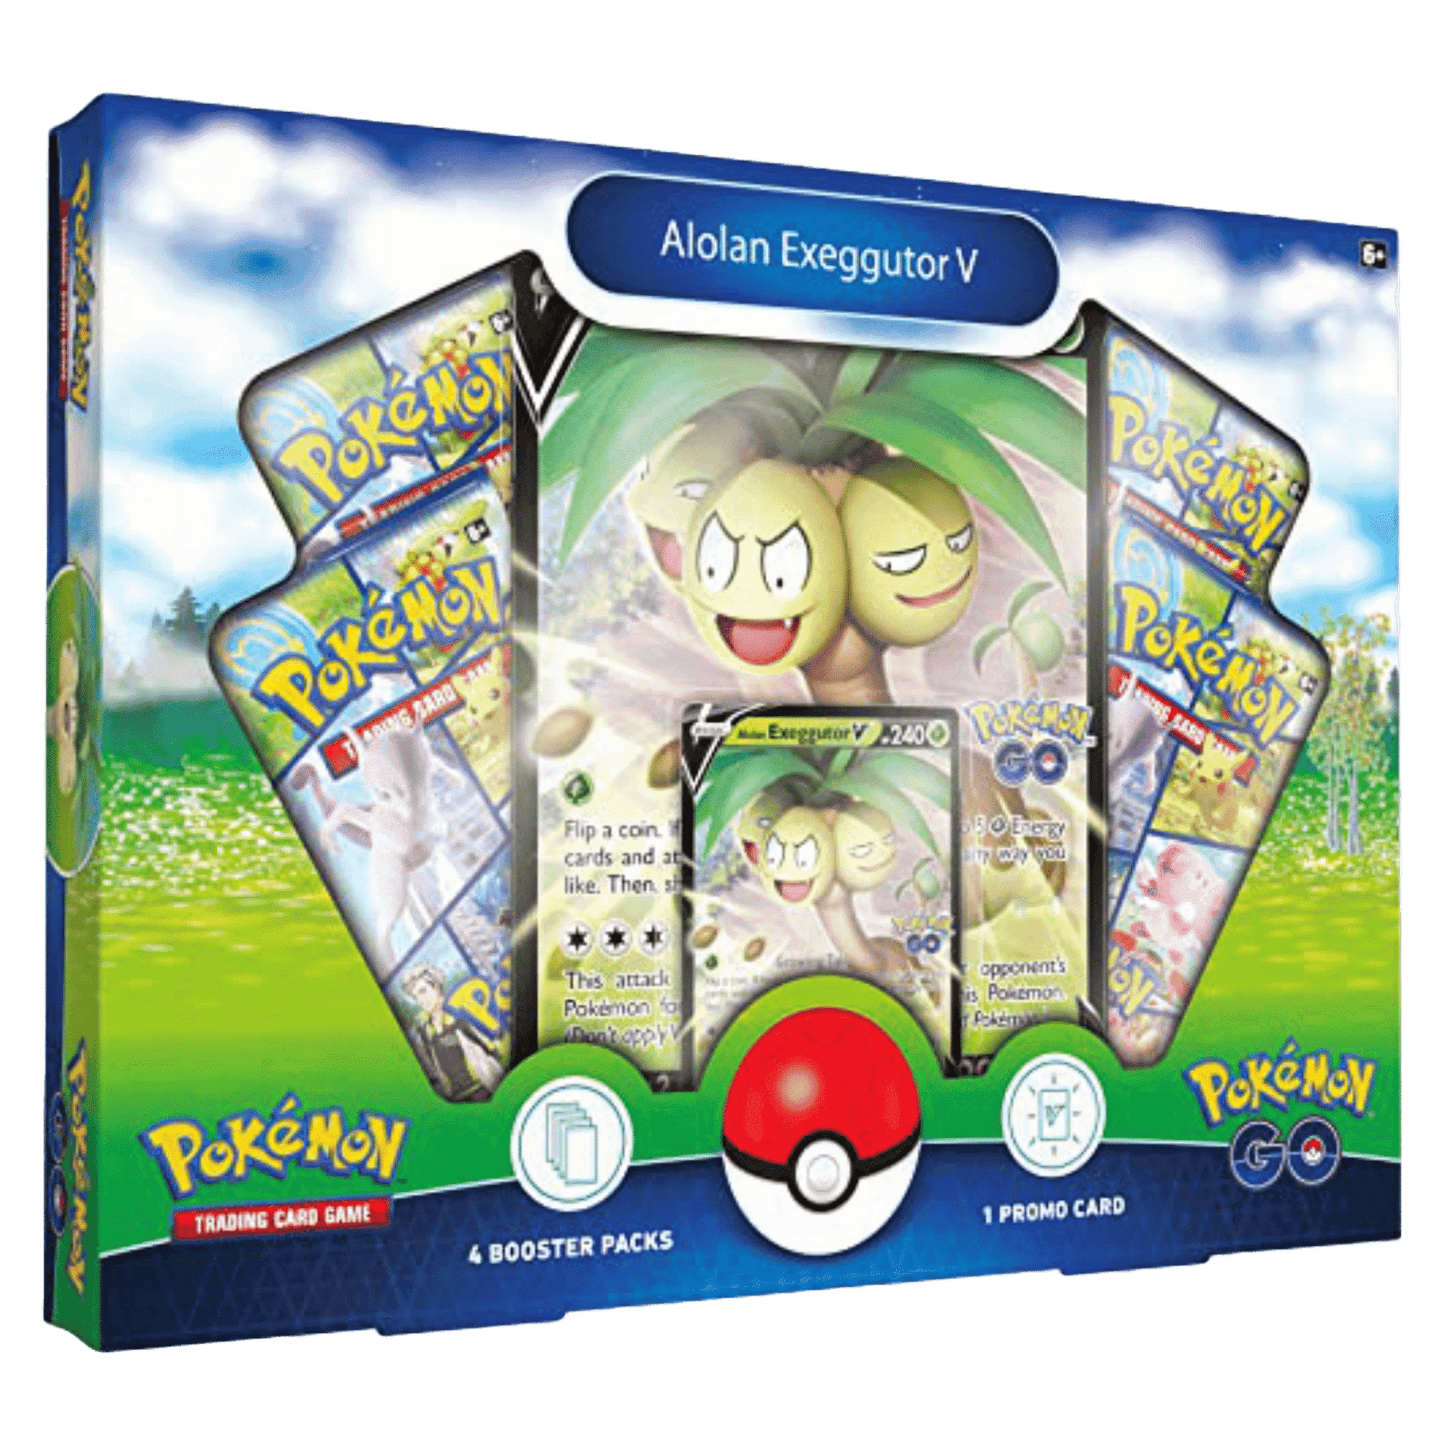 Pokémon: Go Alolan Exeggutor V bundle